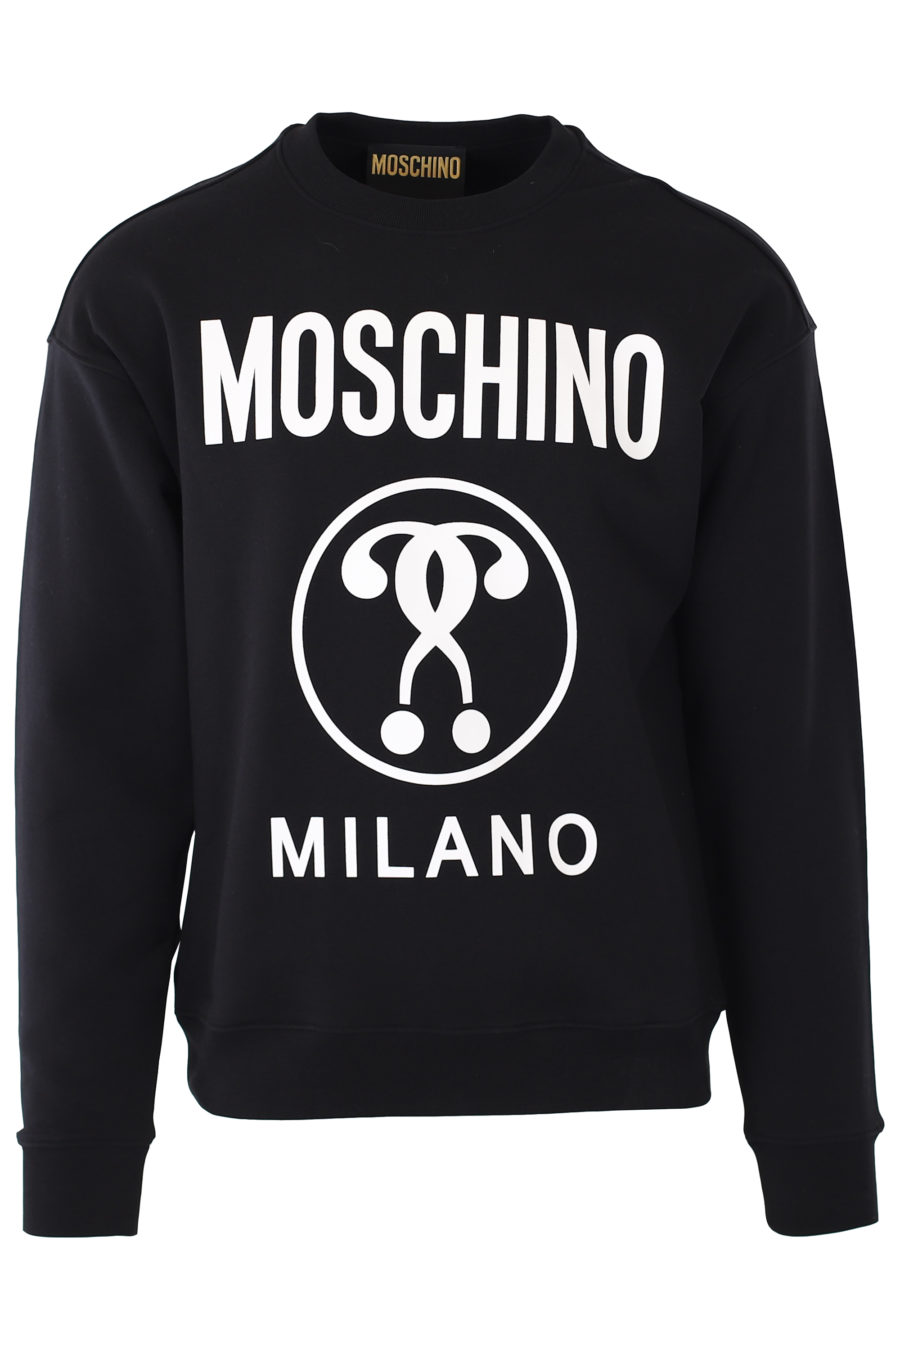 Black sweatshirt with white milano double question logo - IMG 9349